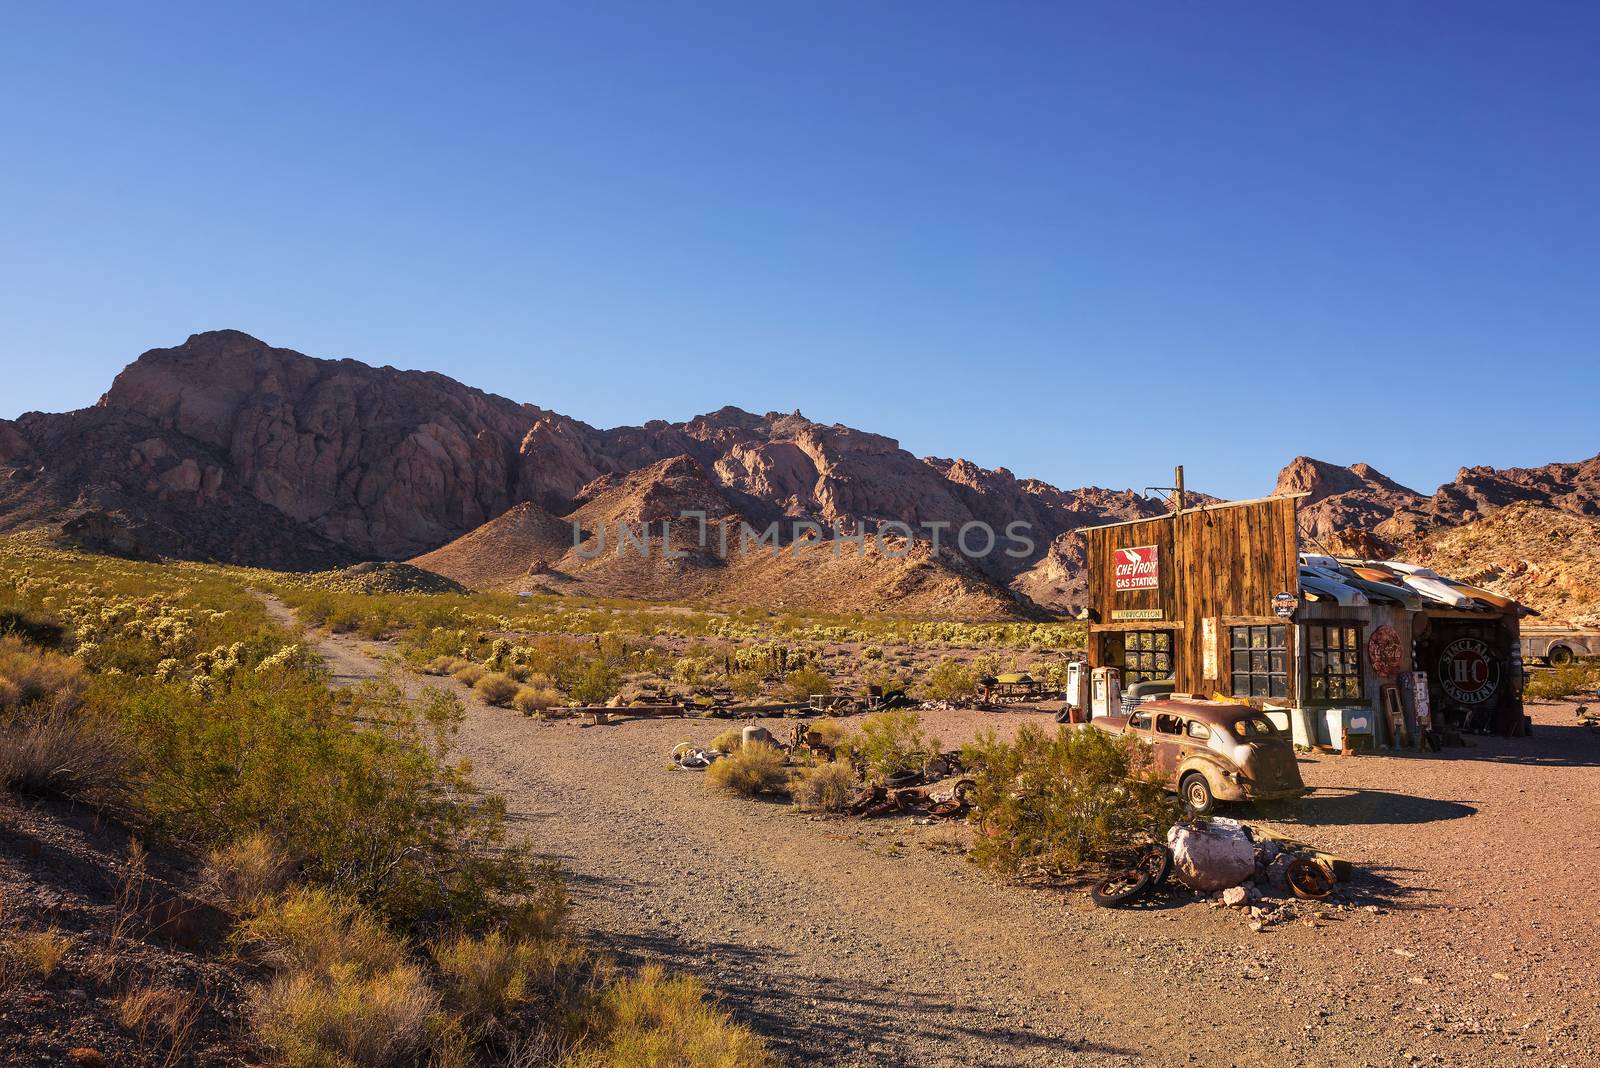 Nelson ghost town located in the El Dorado Canyon near Las Vegas, Nevada by nickfox